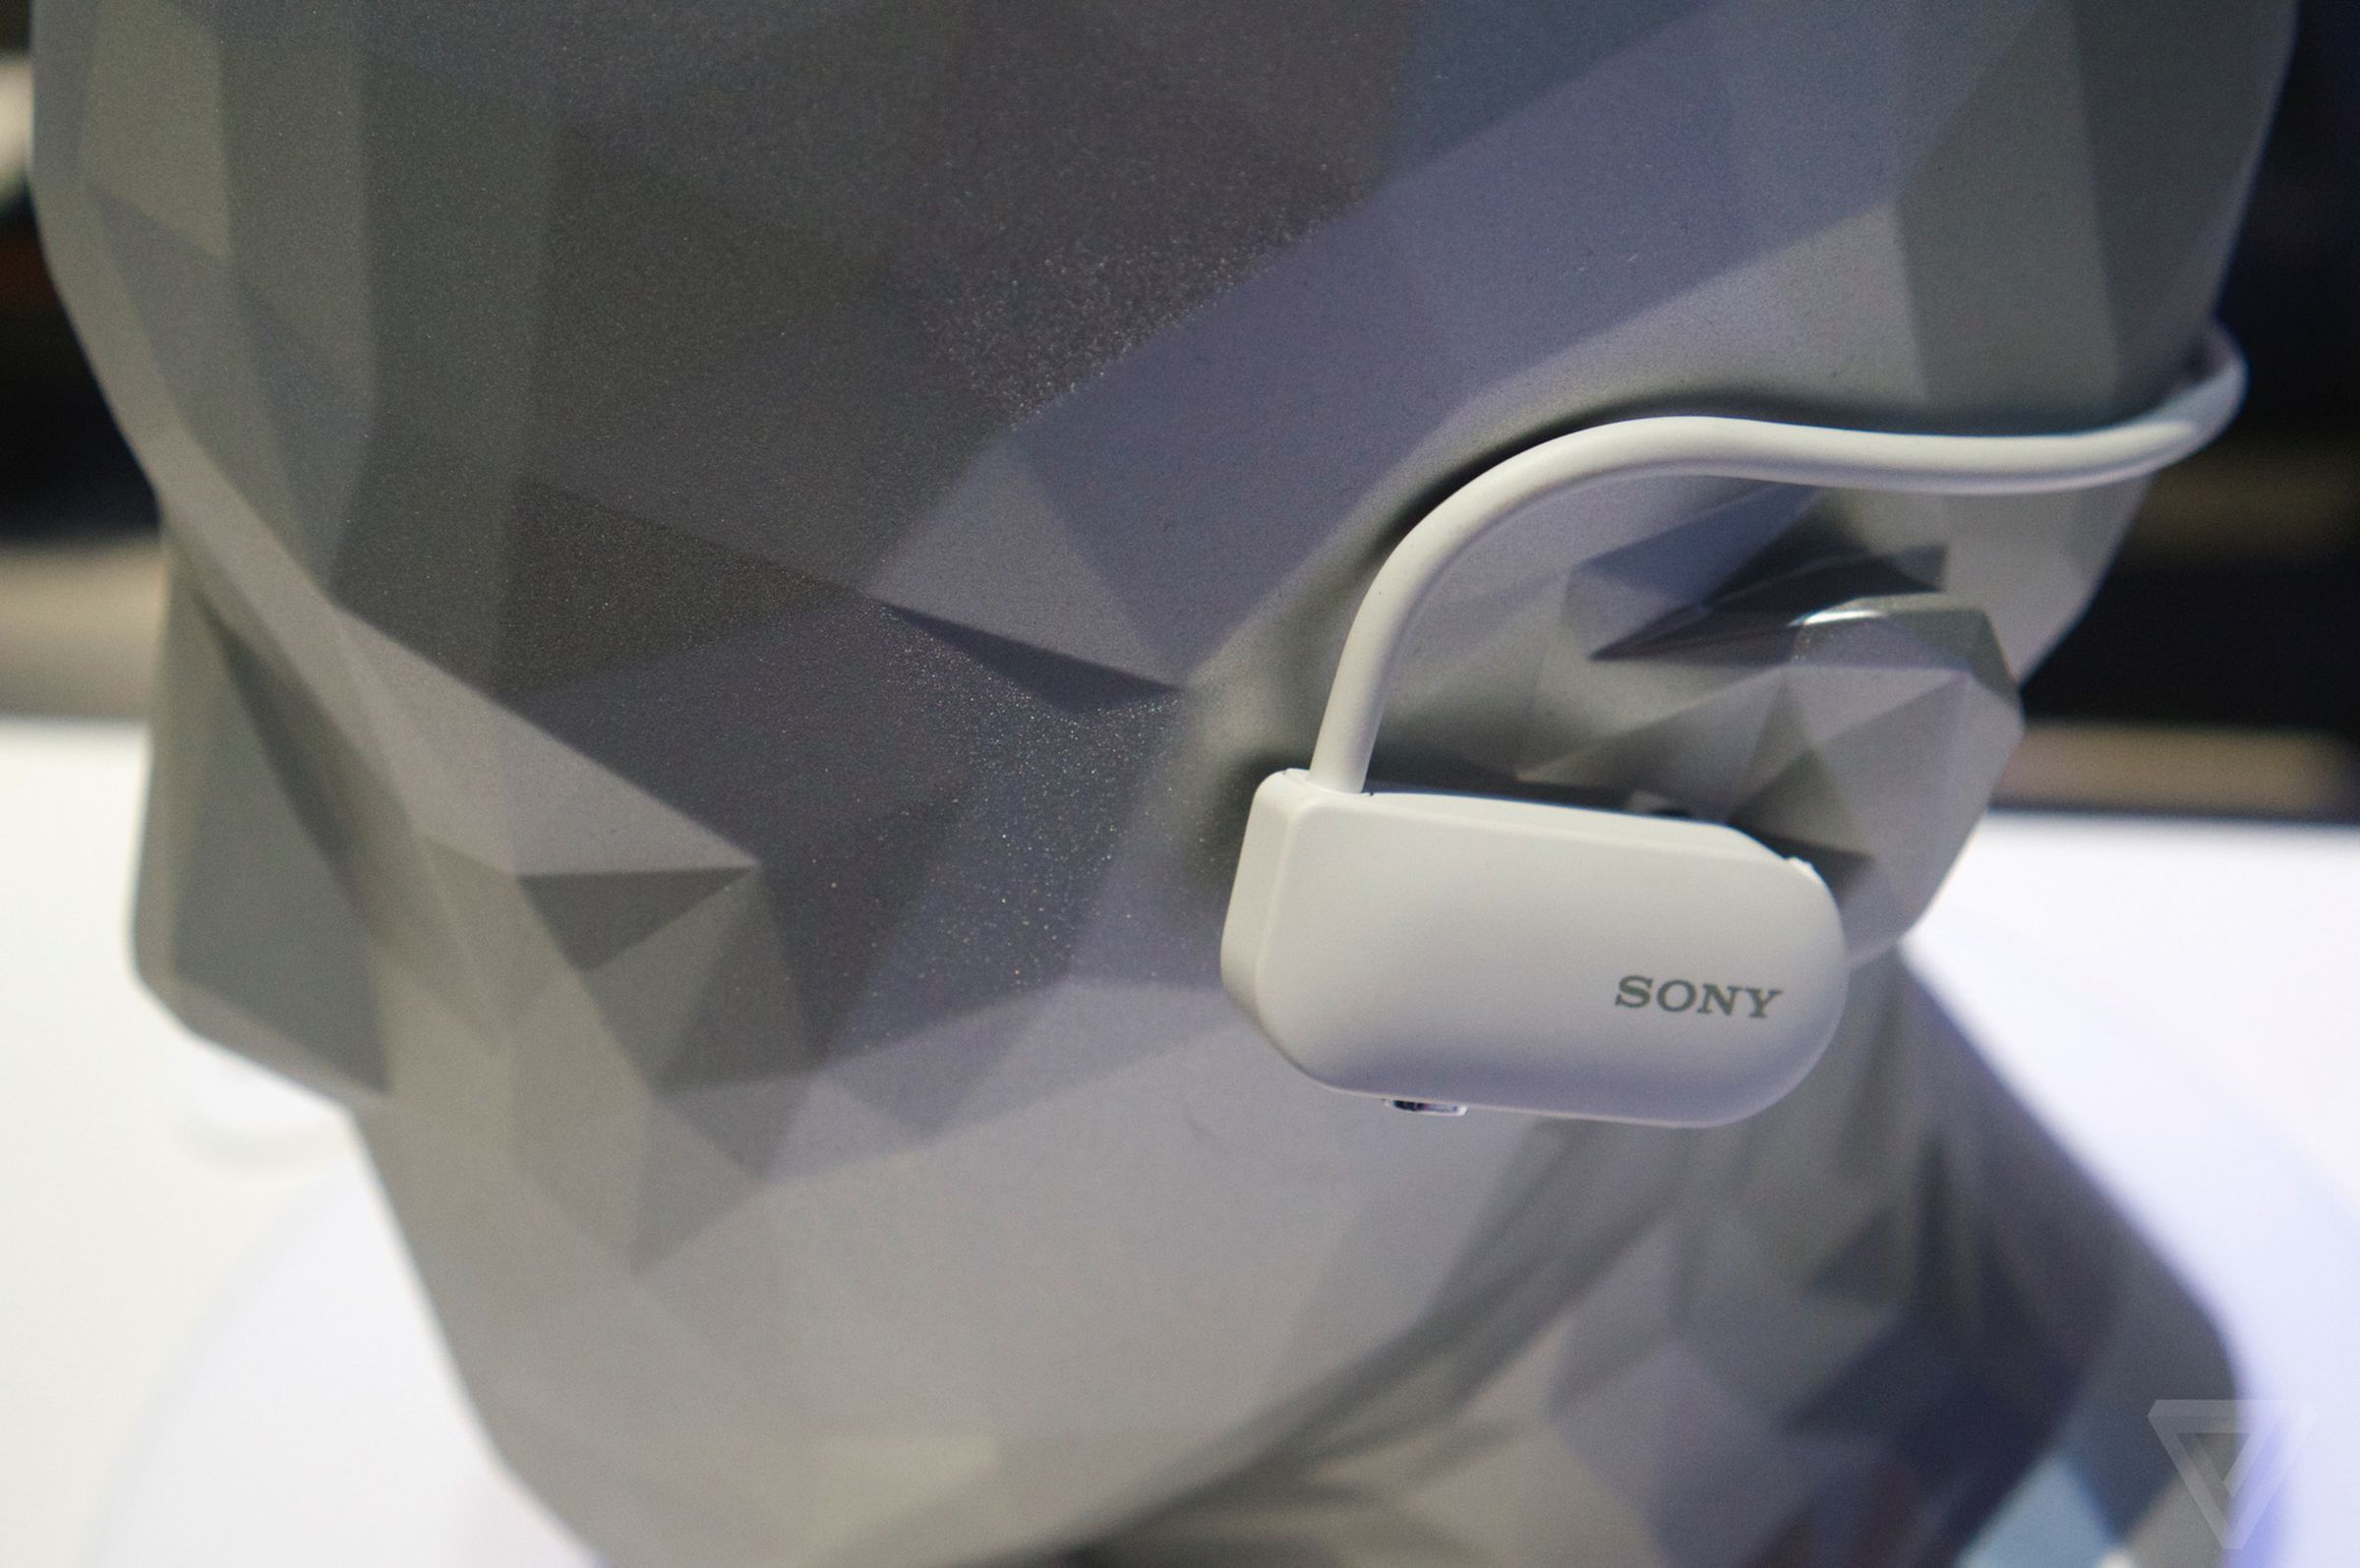 Sony Smart B-Trainer headphones